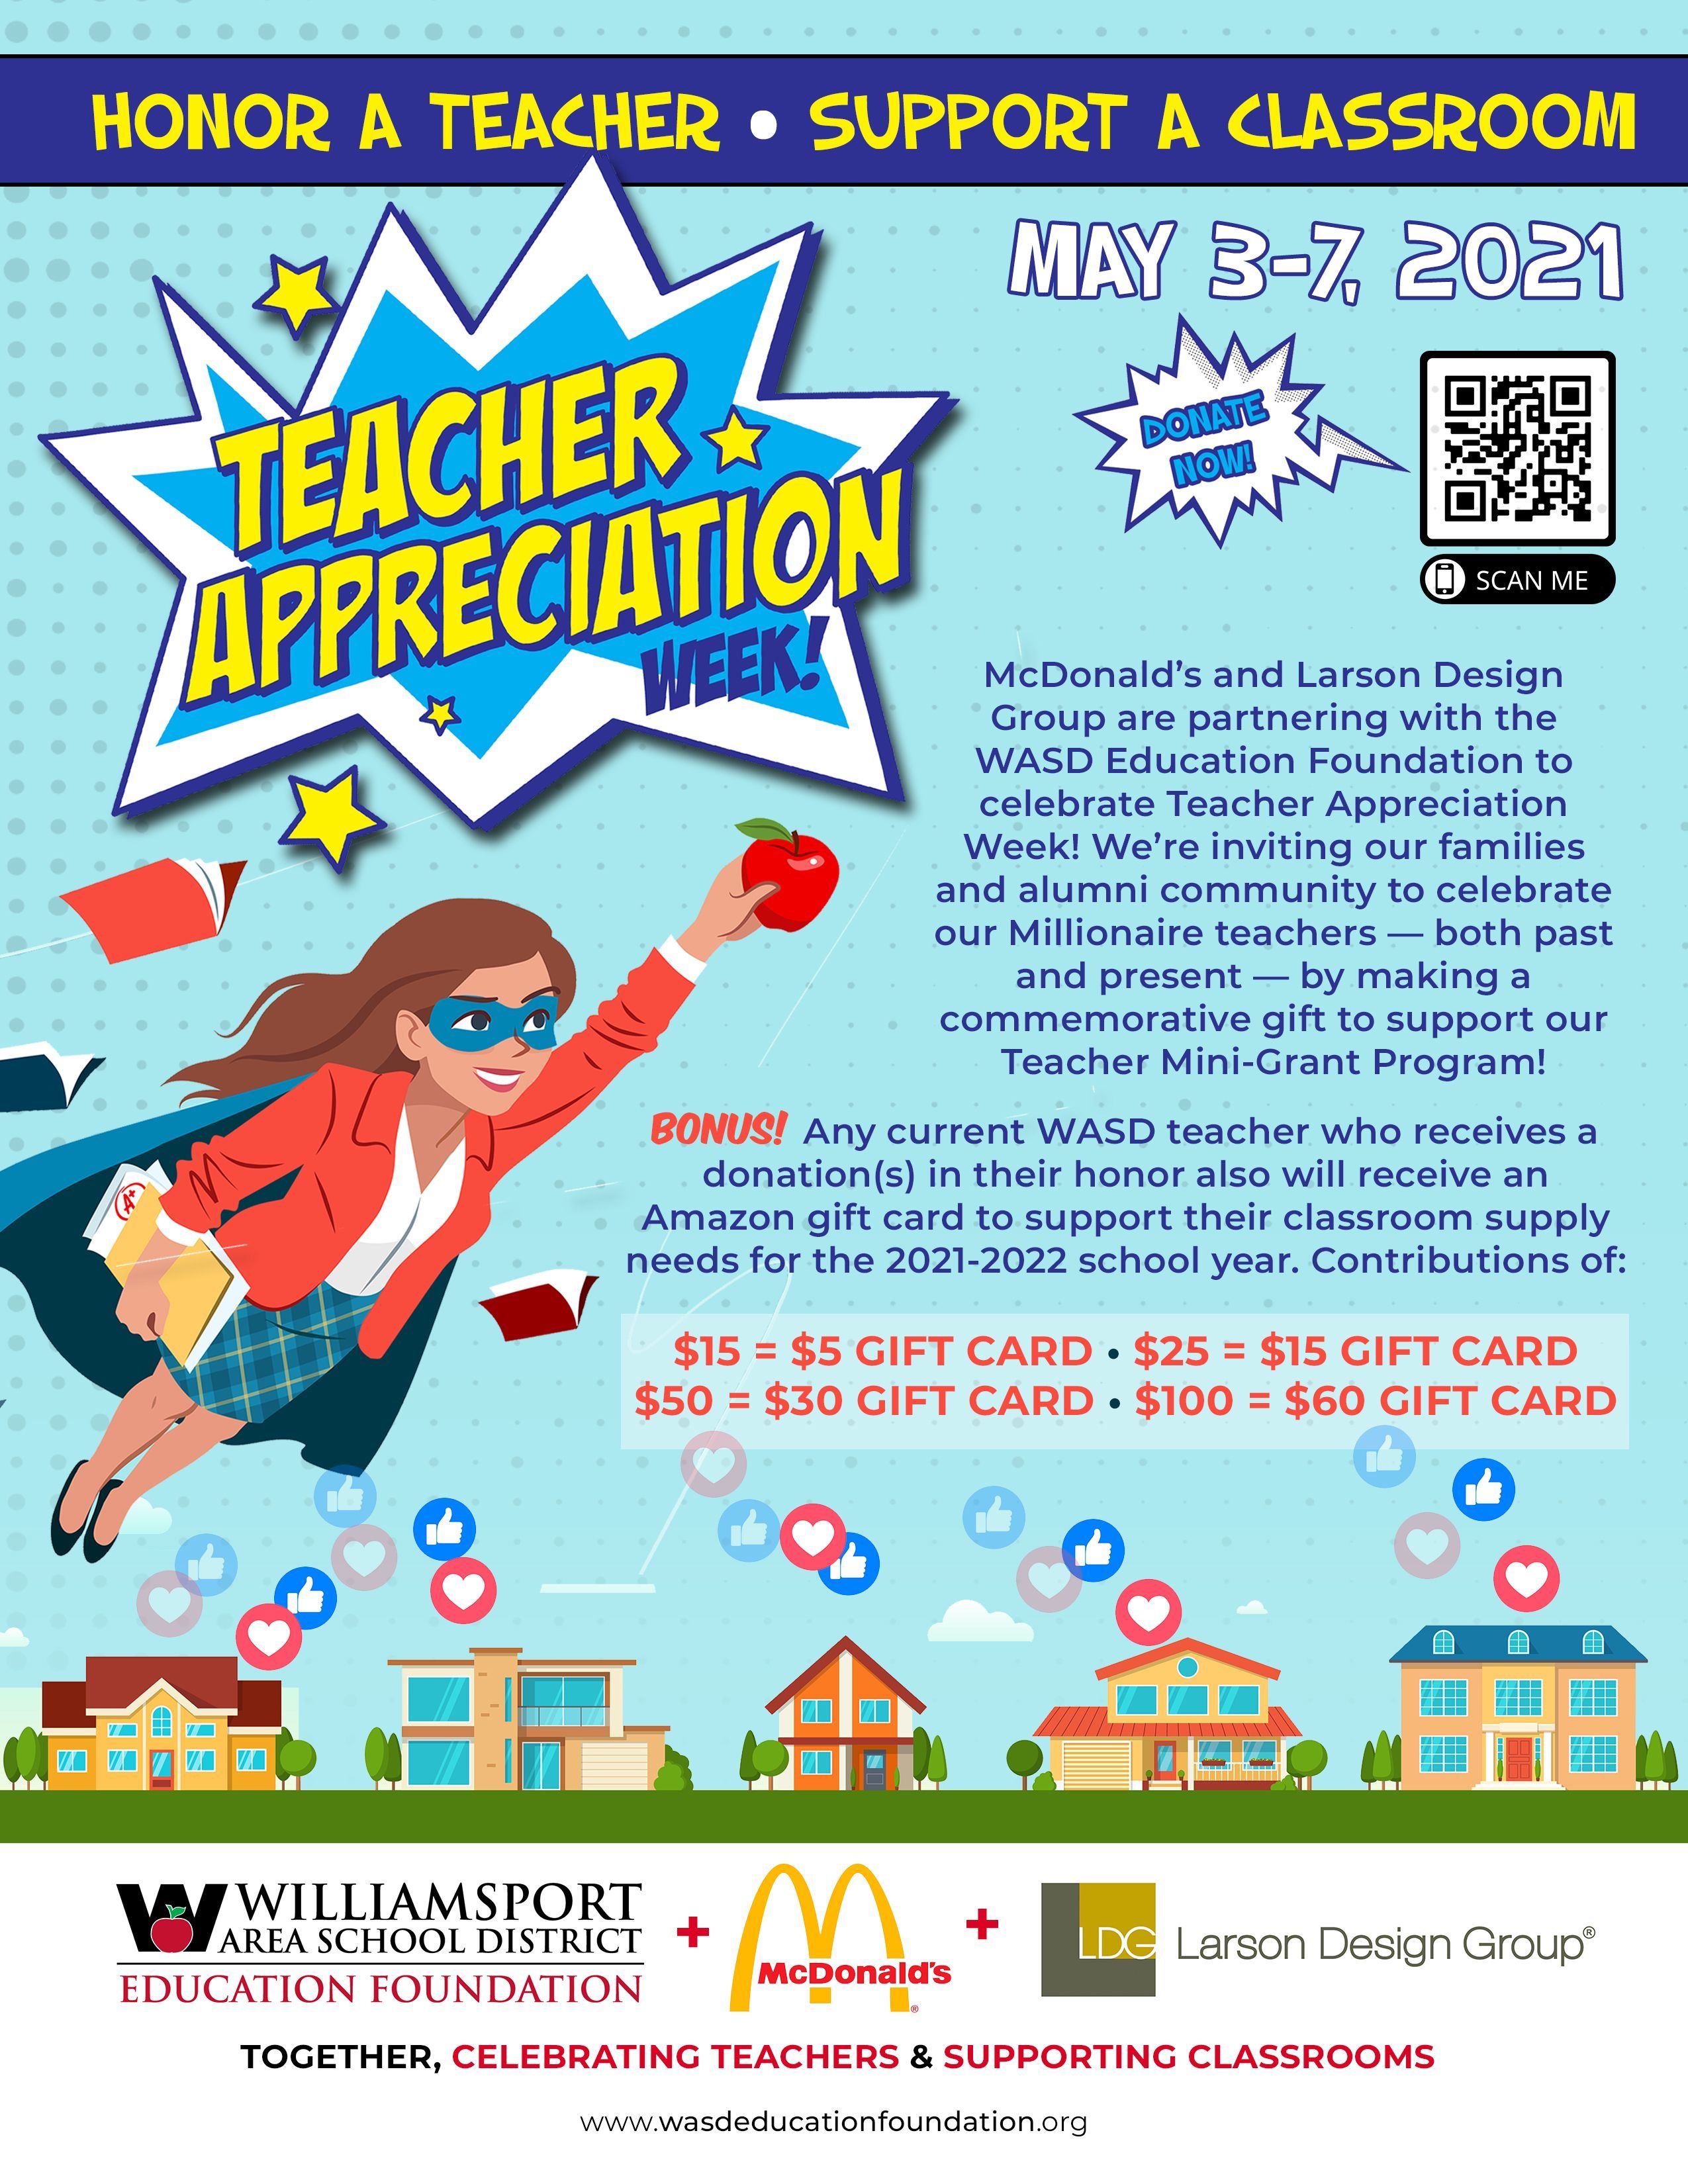 McDonald's, Larson Design Group Partner with WASDEF to Celebrate Teacher Appreciation Week